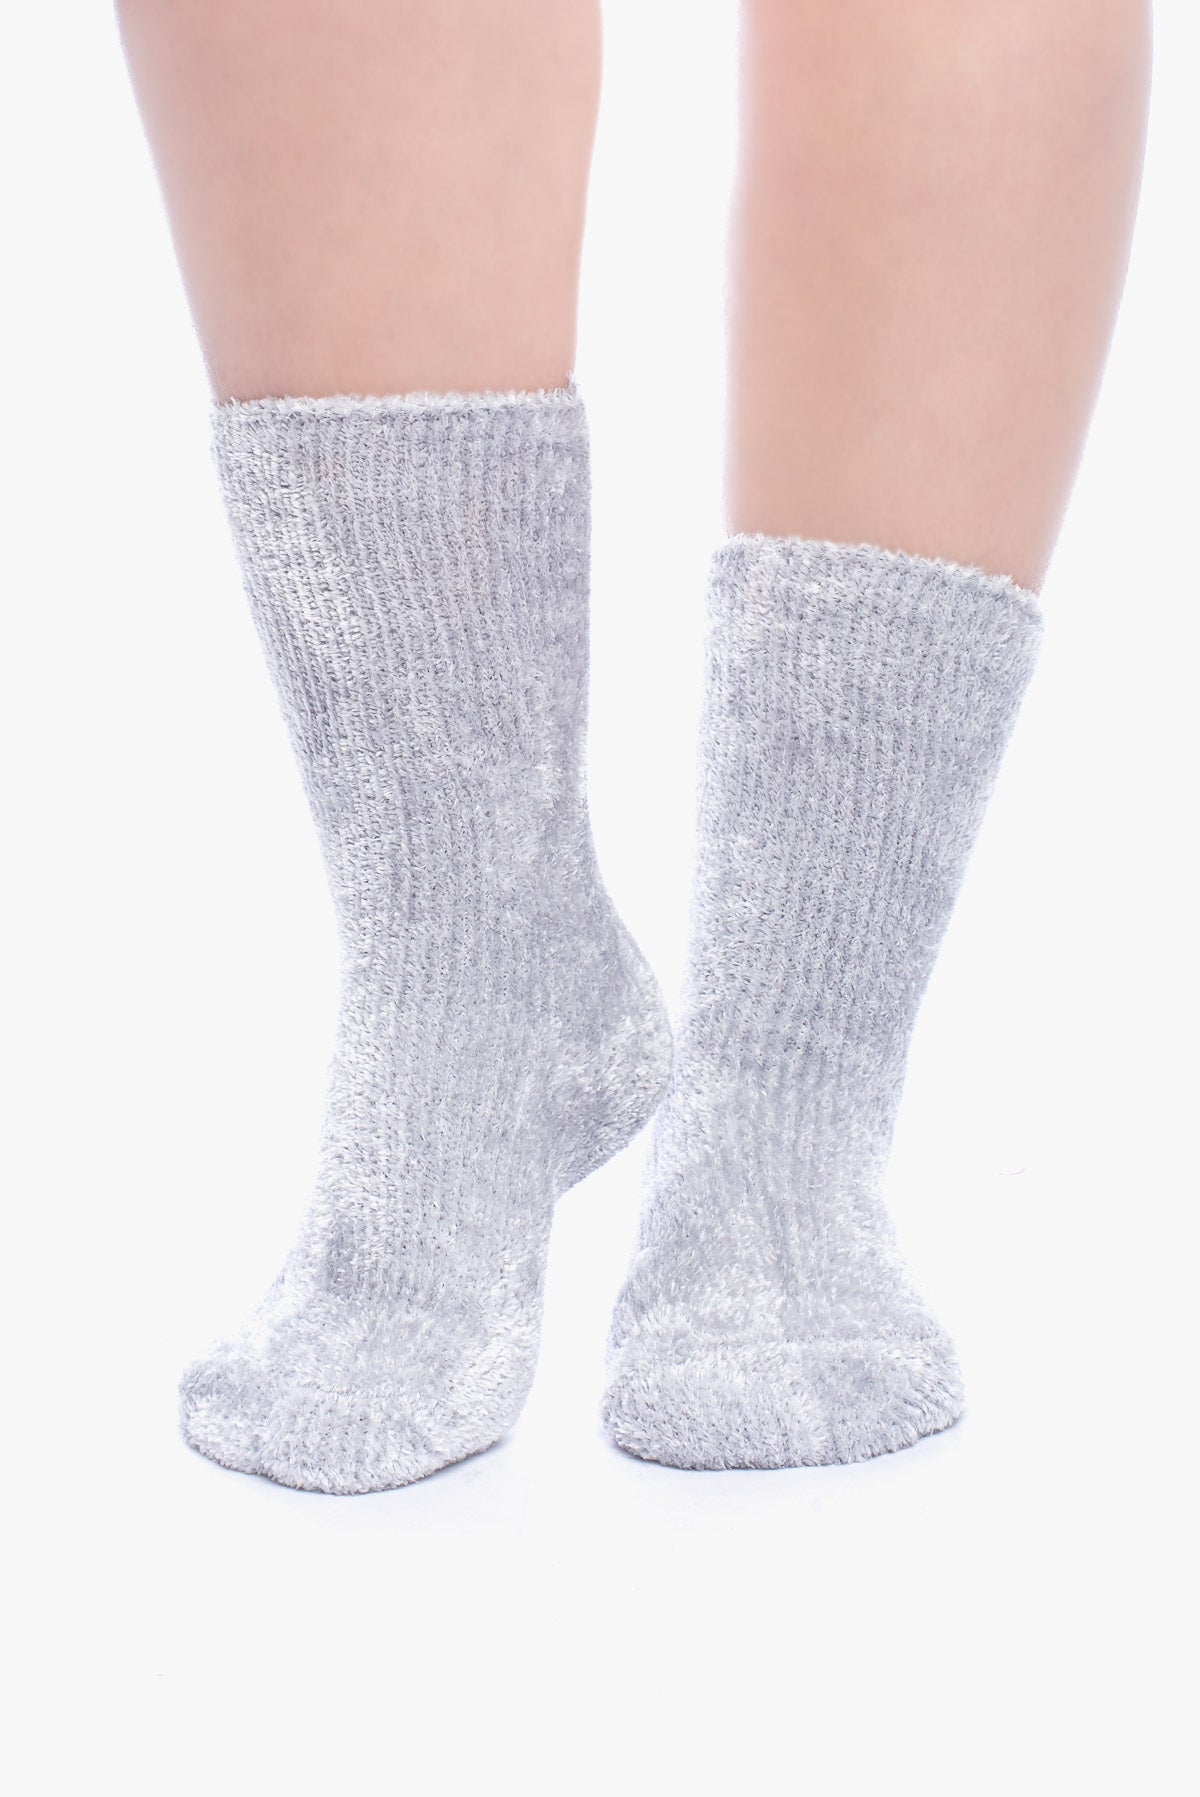 SIMONE 2 grey & blue socks